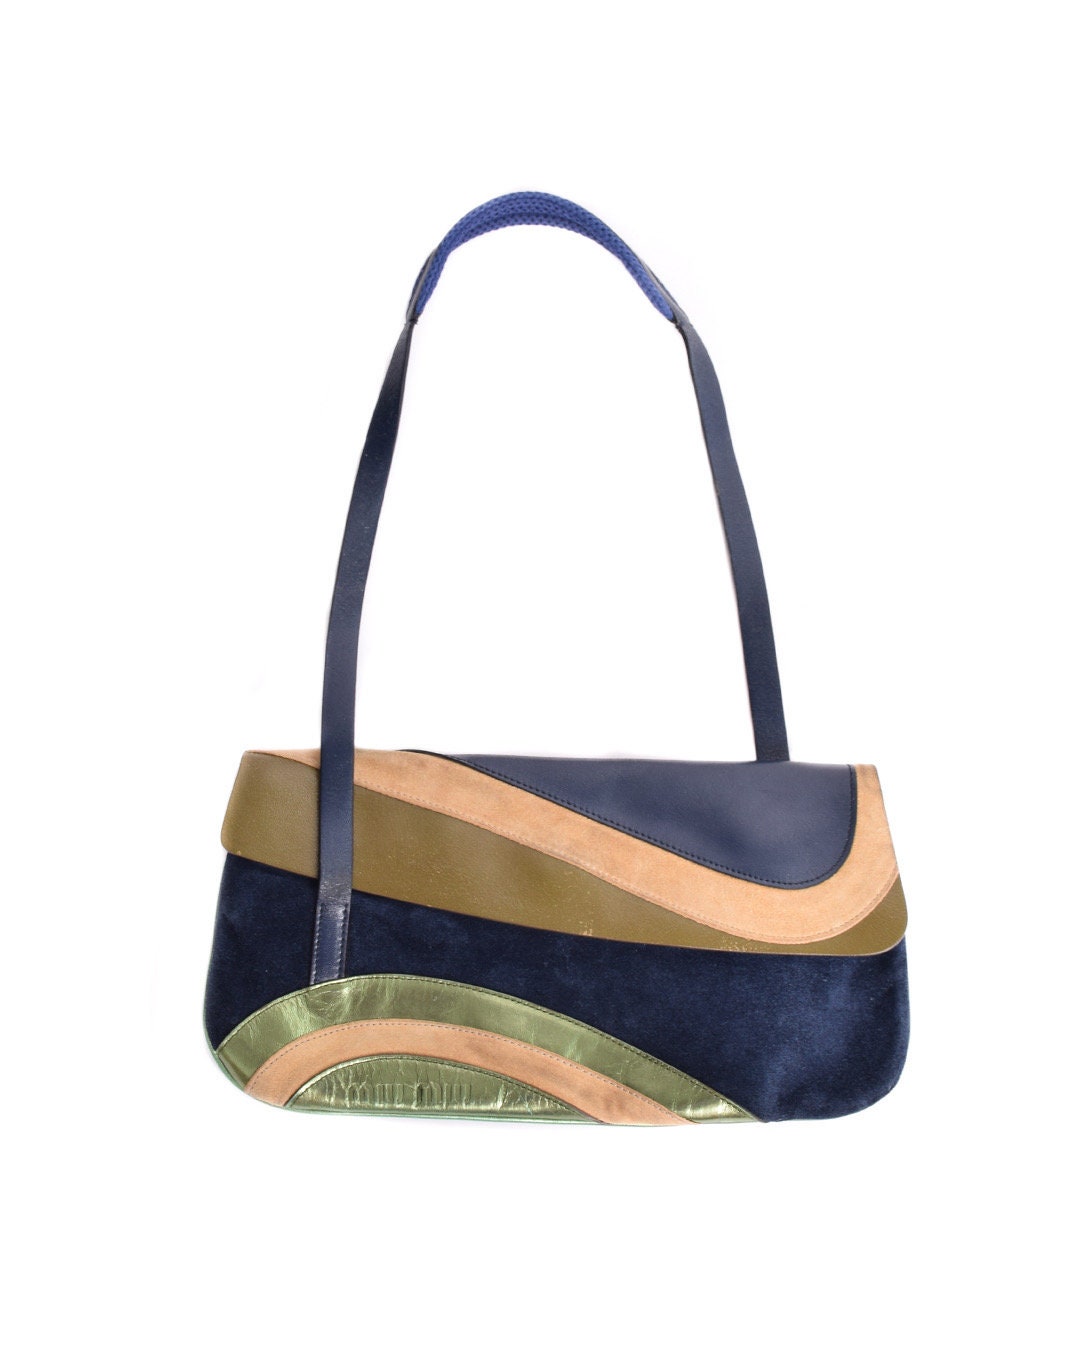 Miu Miu - Authenticated Bow Bag Handbag - Leather Yellow Plain for Women, Good Condition